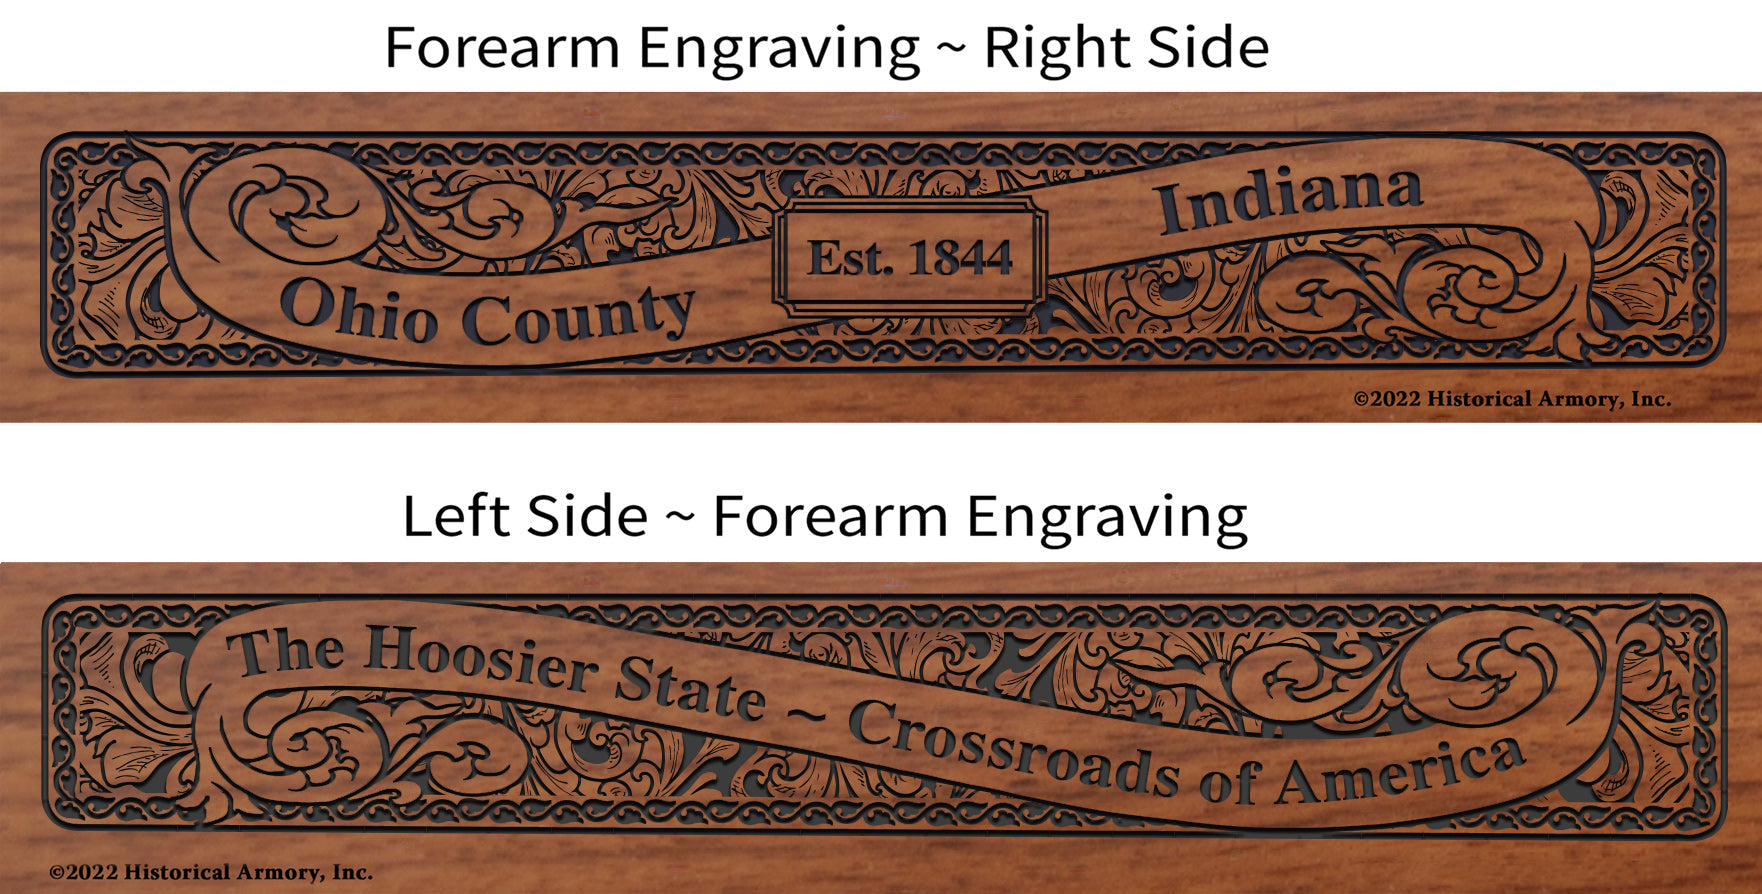 Ohio County Indiana Engraved Rifle Forearm